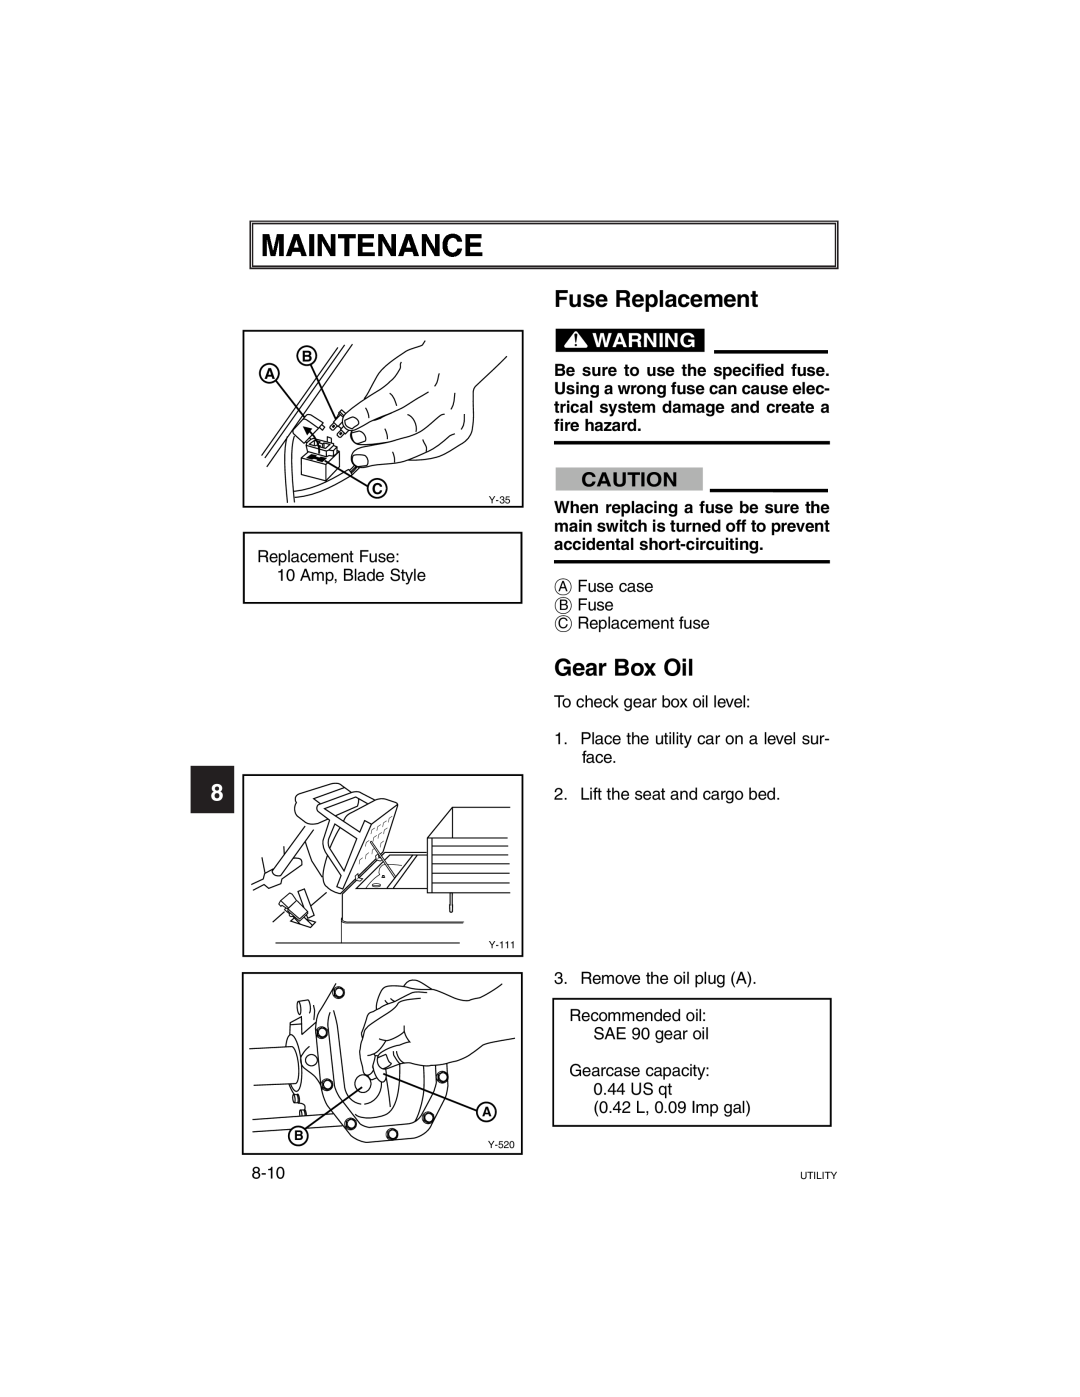 Yamaha G21A manual Maintenance, Fuse Replacement, Gear Box Oil, 8-10 